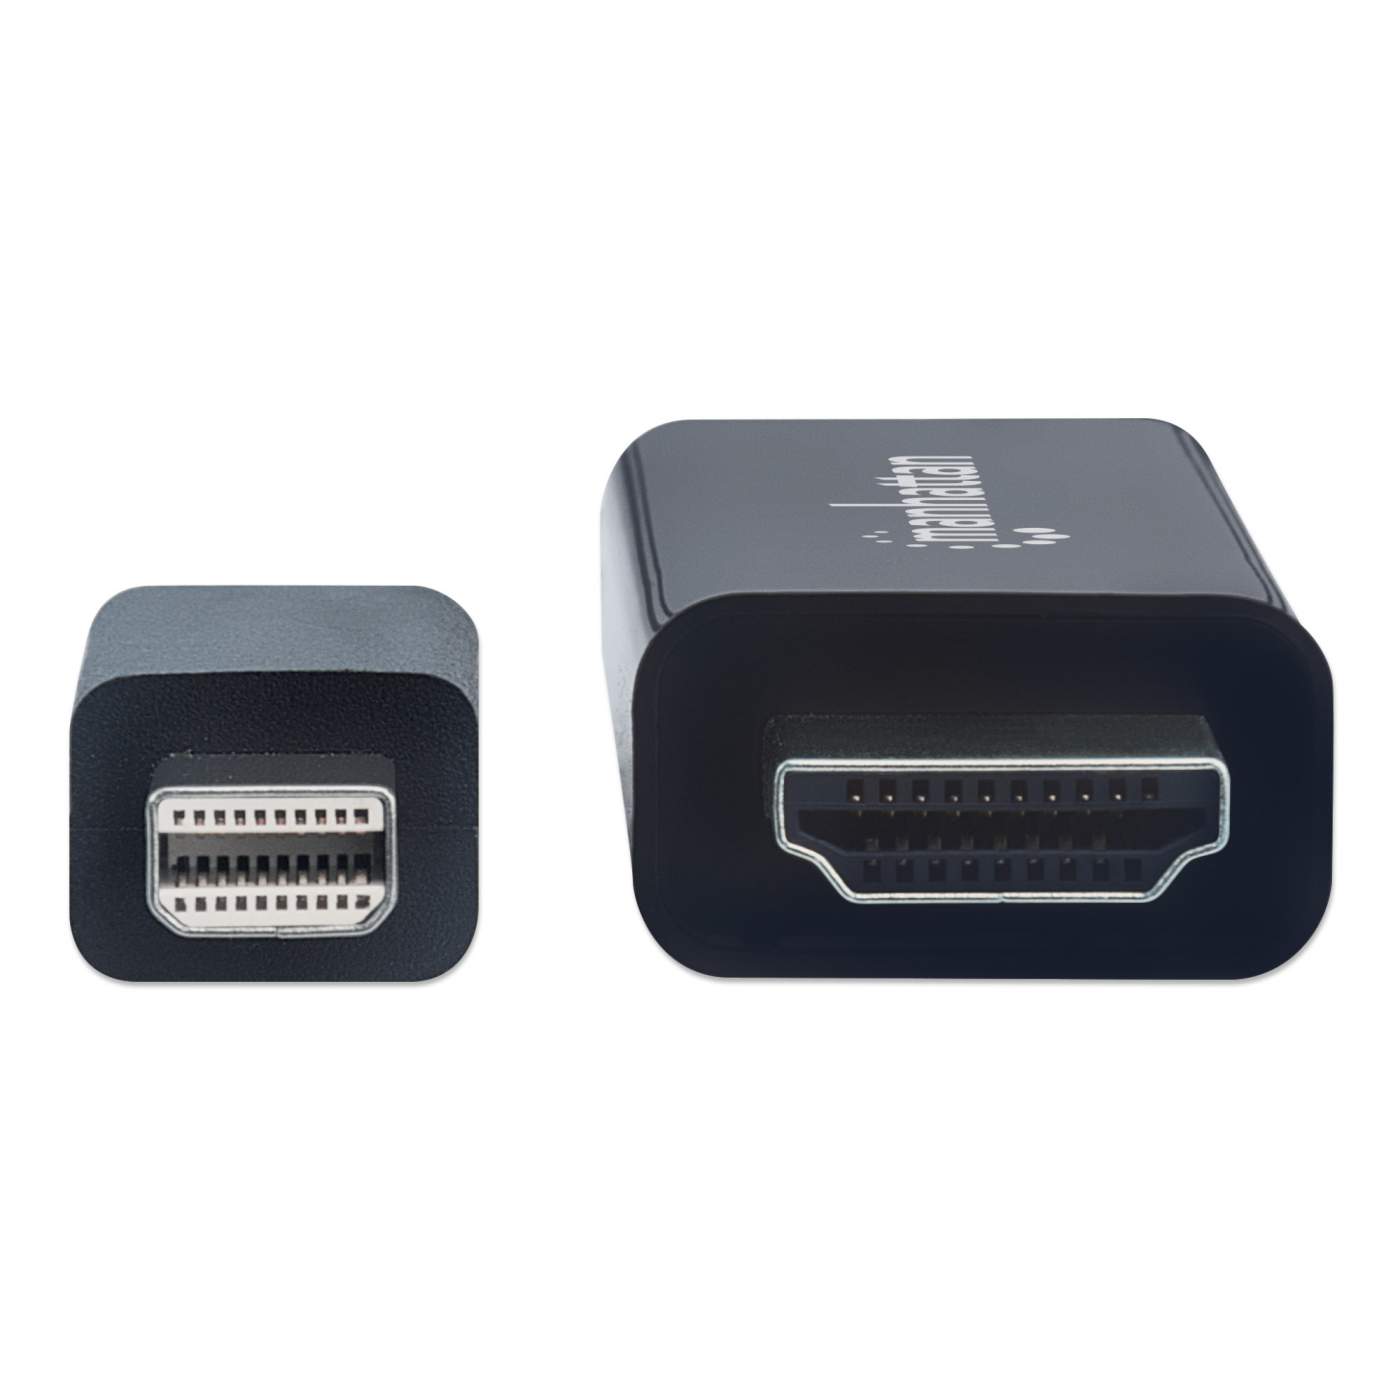 Compre Manhattan Cable HDMI a HDMI 15 Mtrs 308434